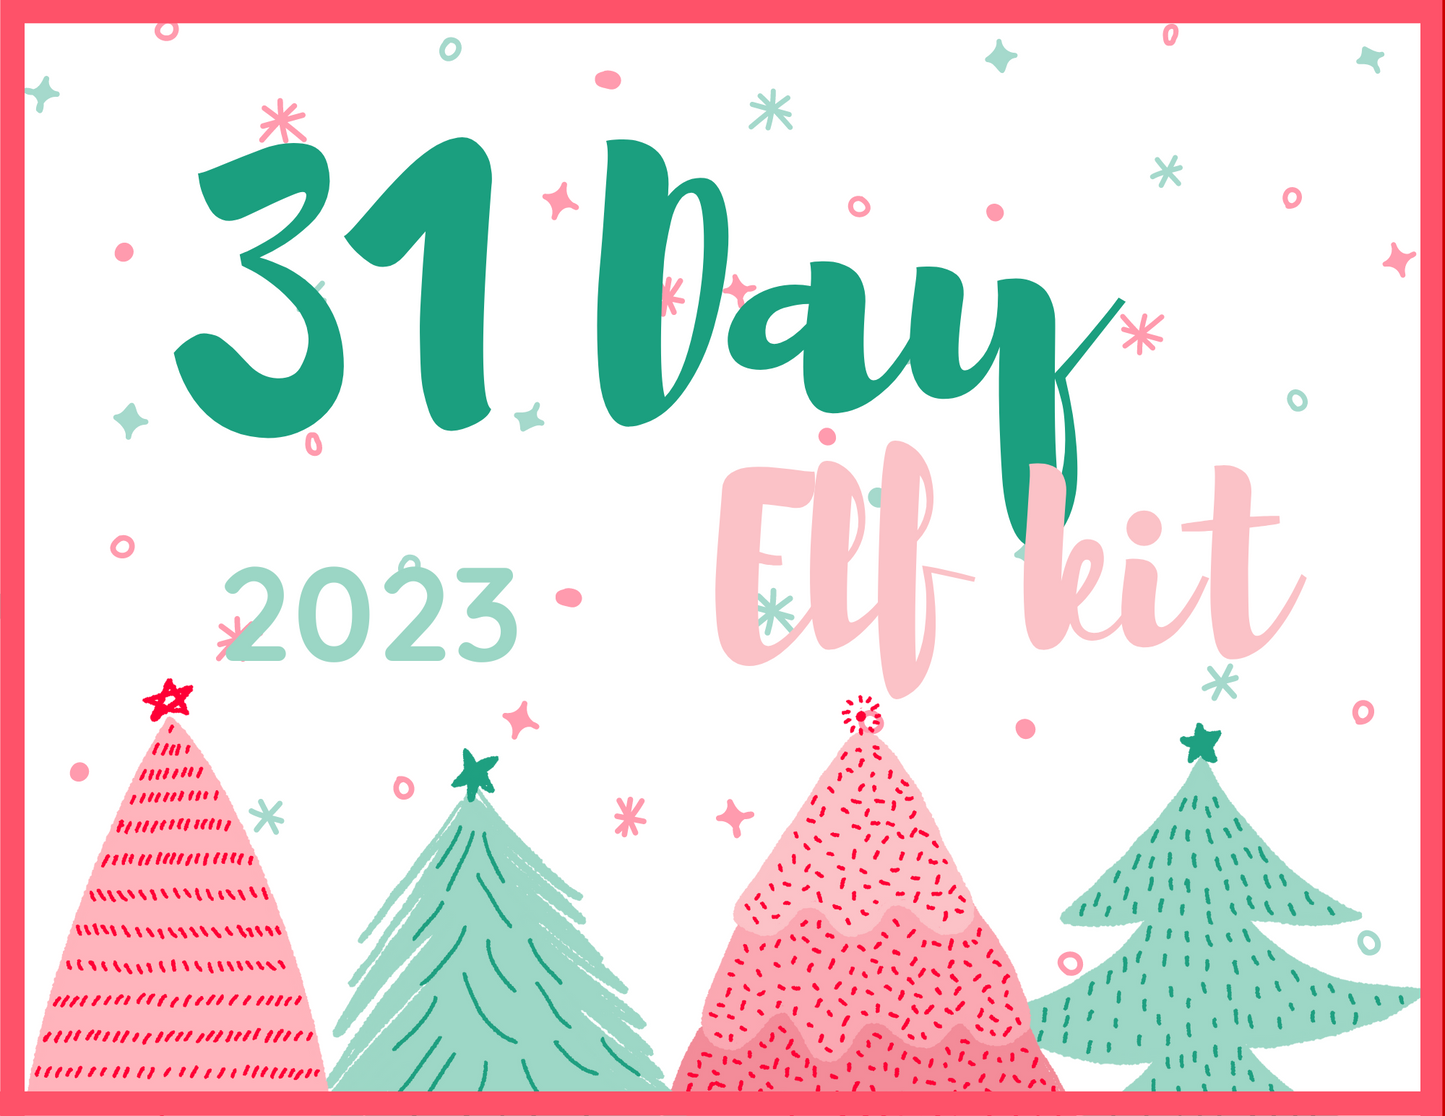 2023 - 31 Day Elf Kit